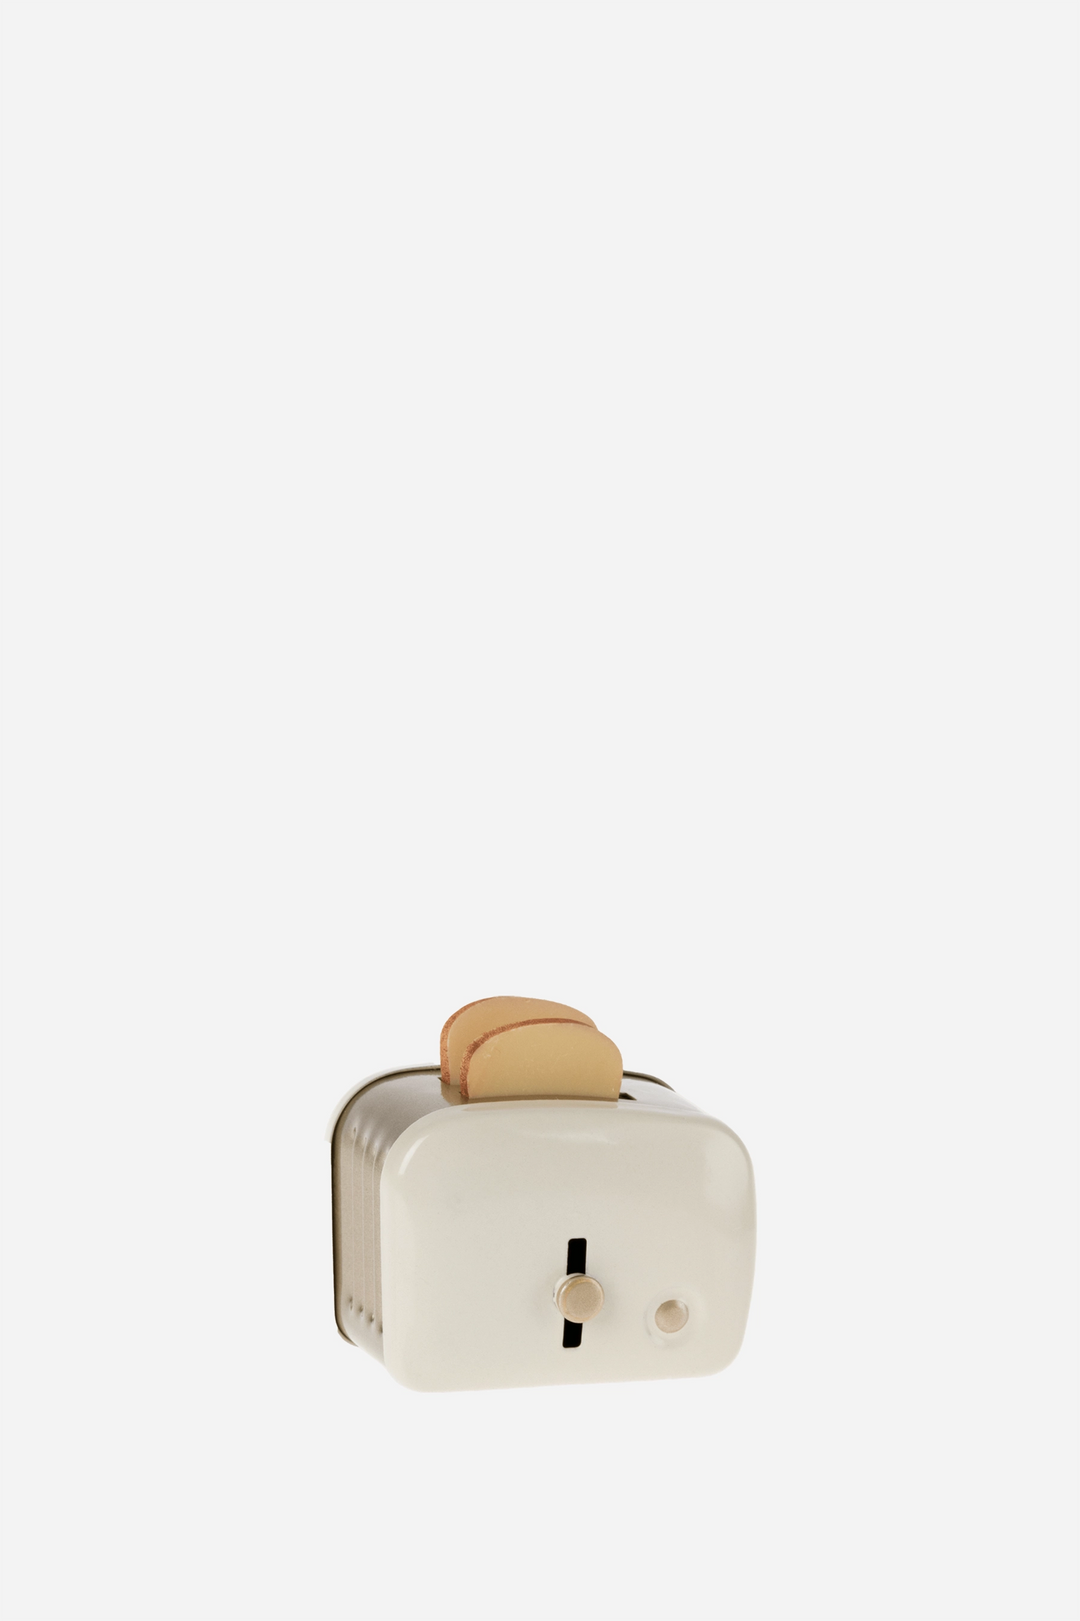 Miniature Toaster & Bread / Off White